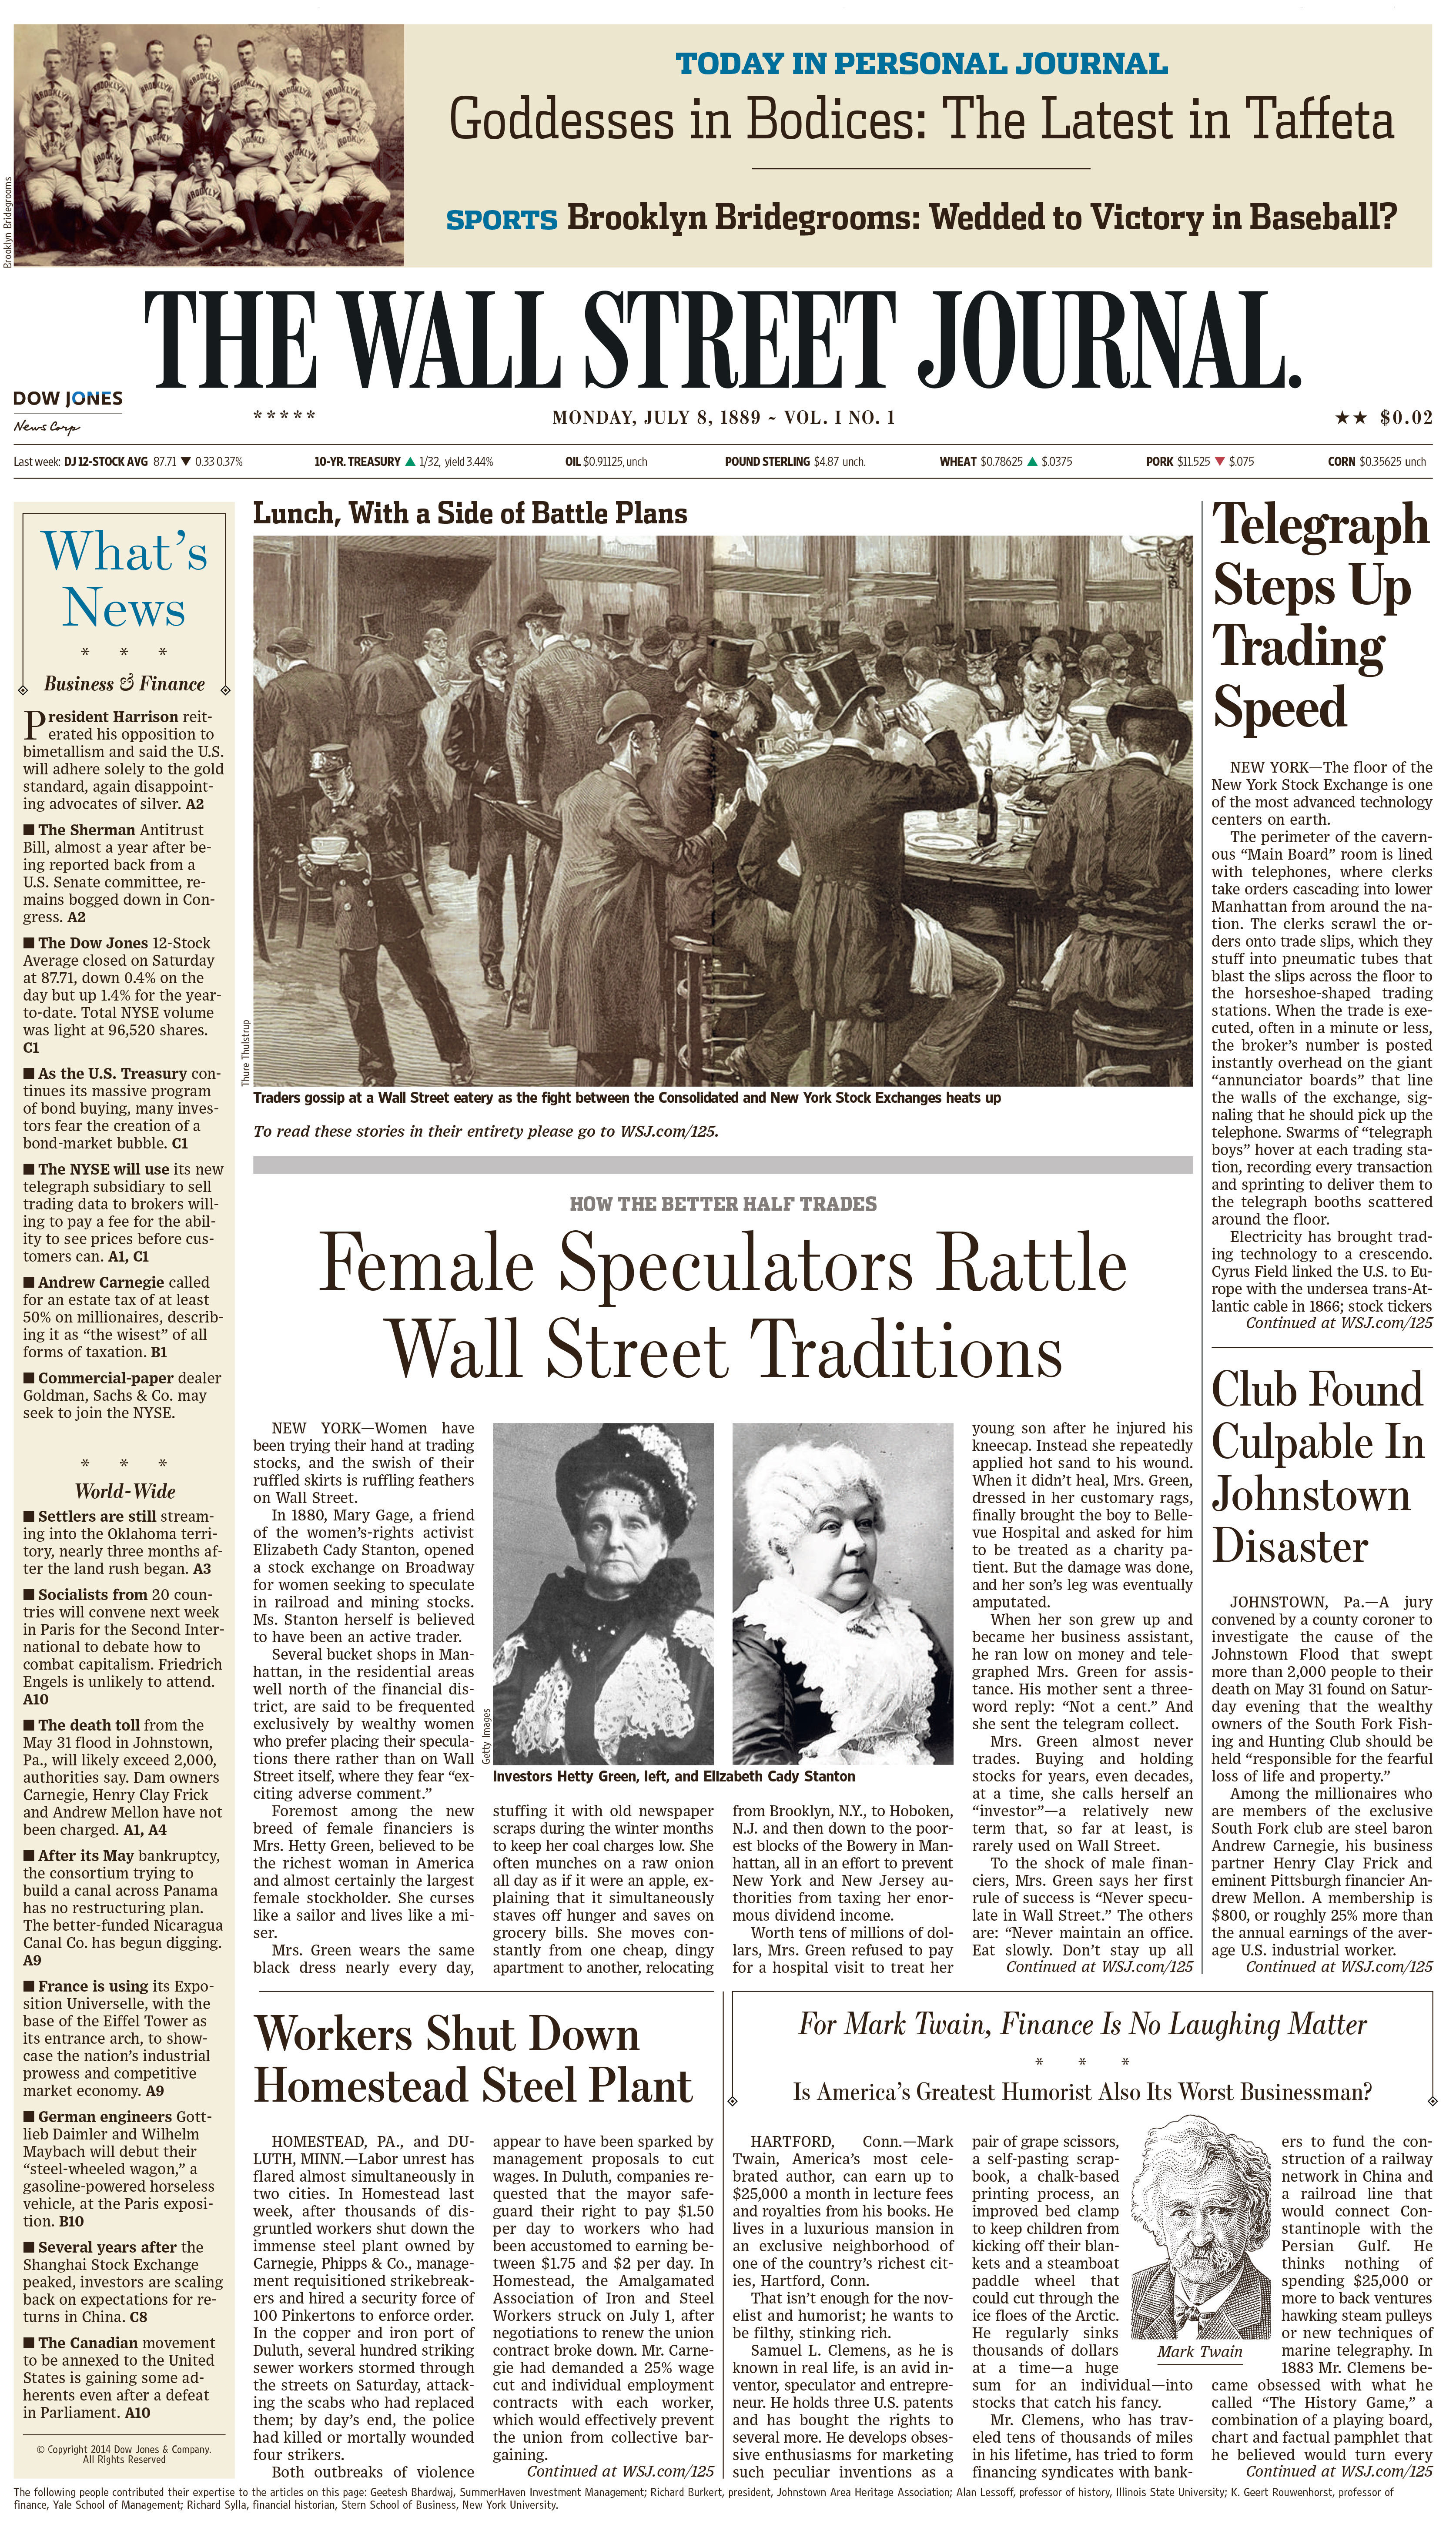 Wall Street Journal Celebrates 125th Anniversary By Reprinting Original